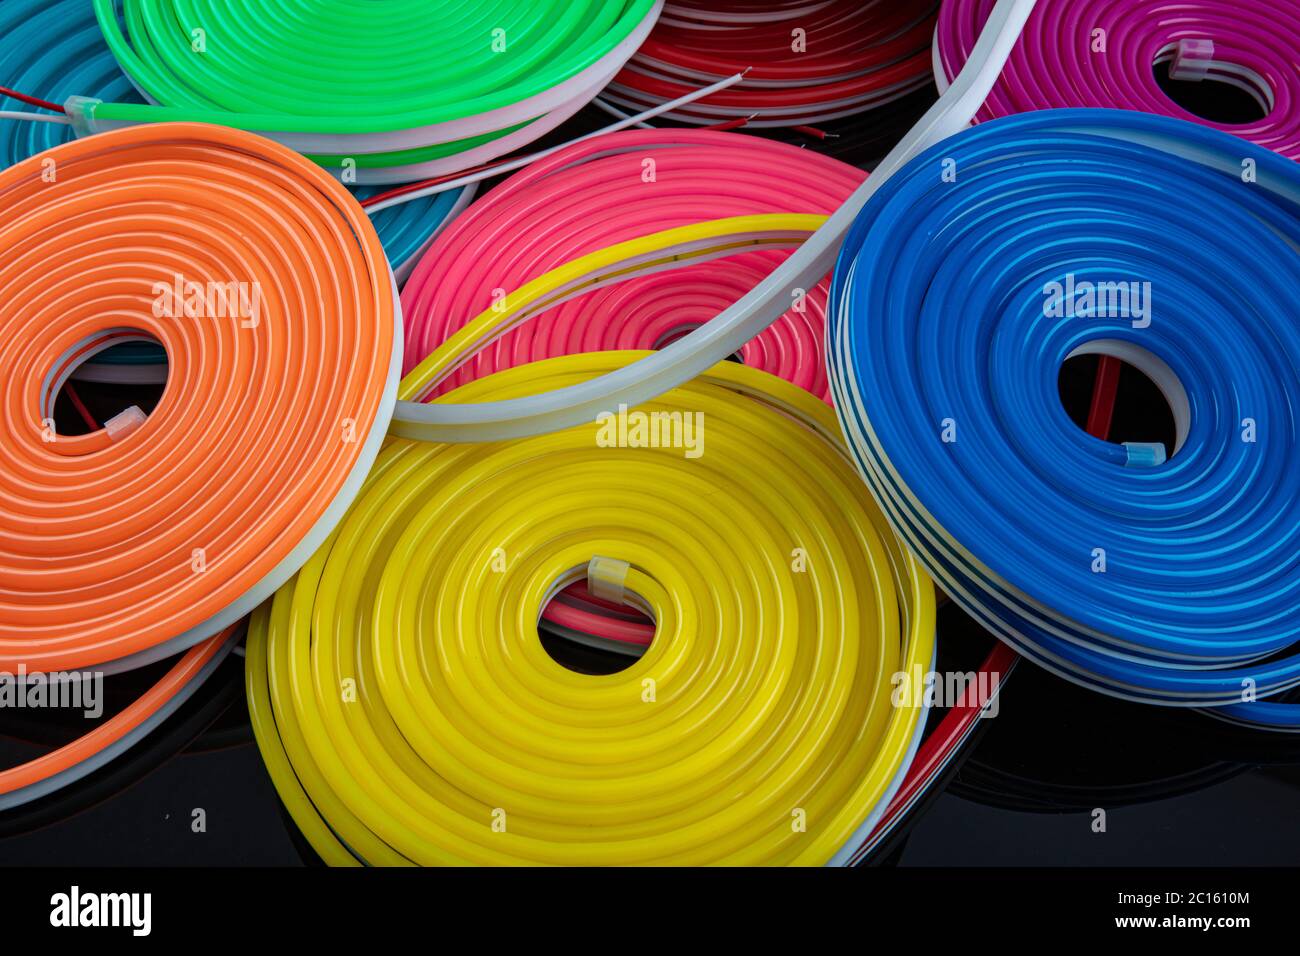 Neon flexible strip light. Flexible led tape neon flex in different colors on black background. Stock Photo